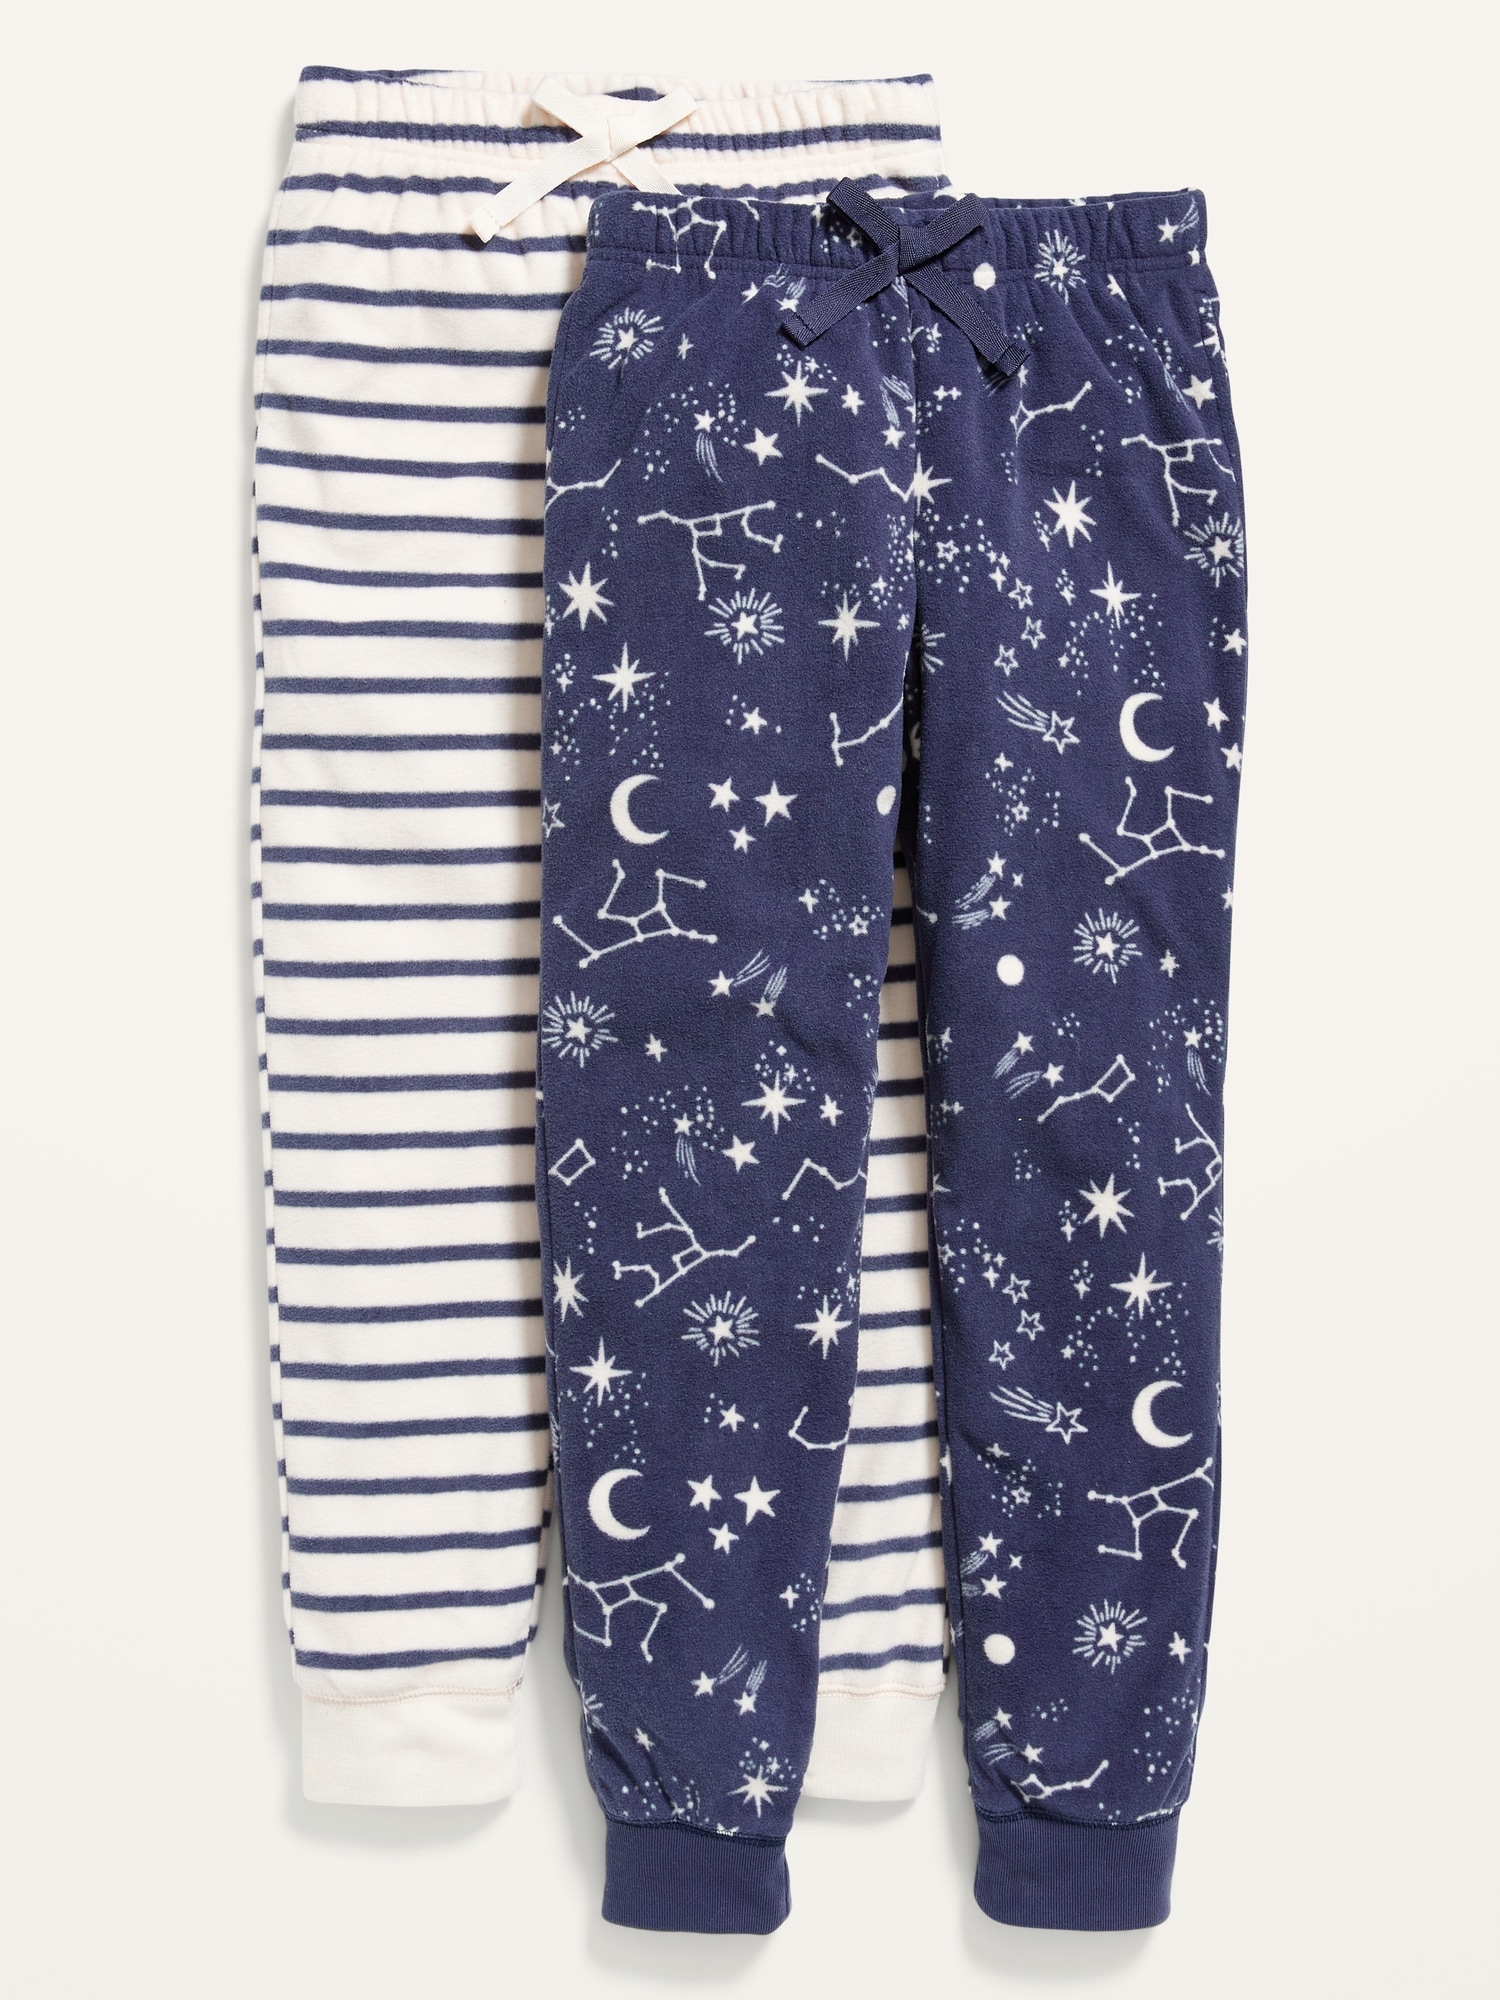 Old Navy Printed Micro Fleece Pajama Jogger Pants 2-Pack for Girls black. 1